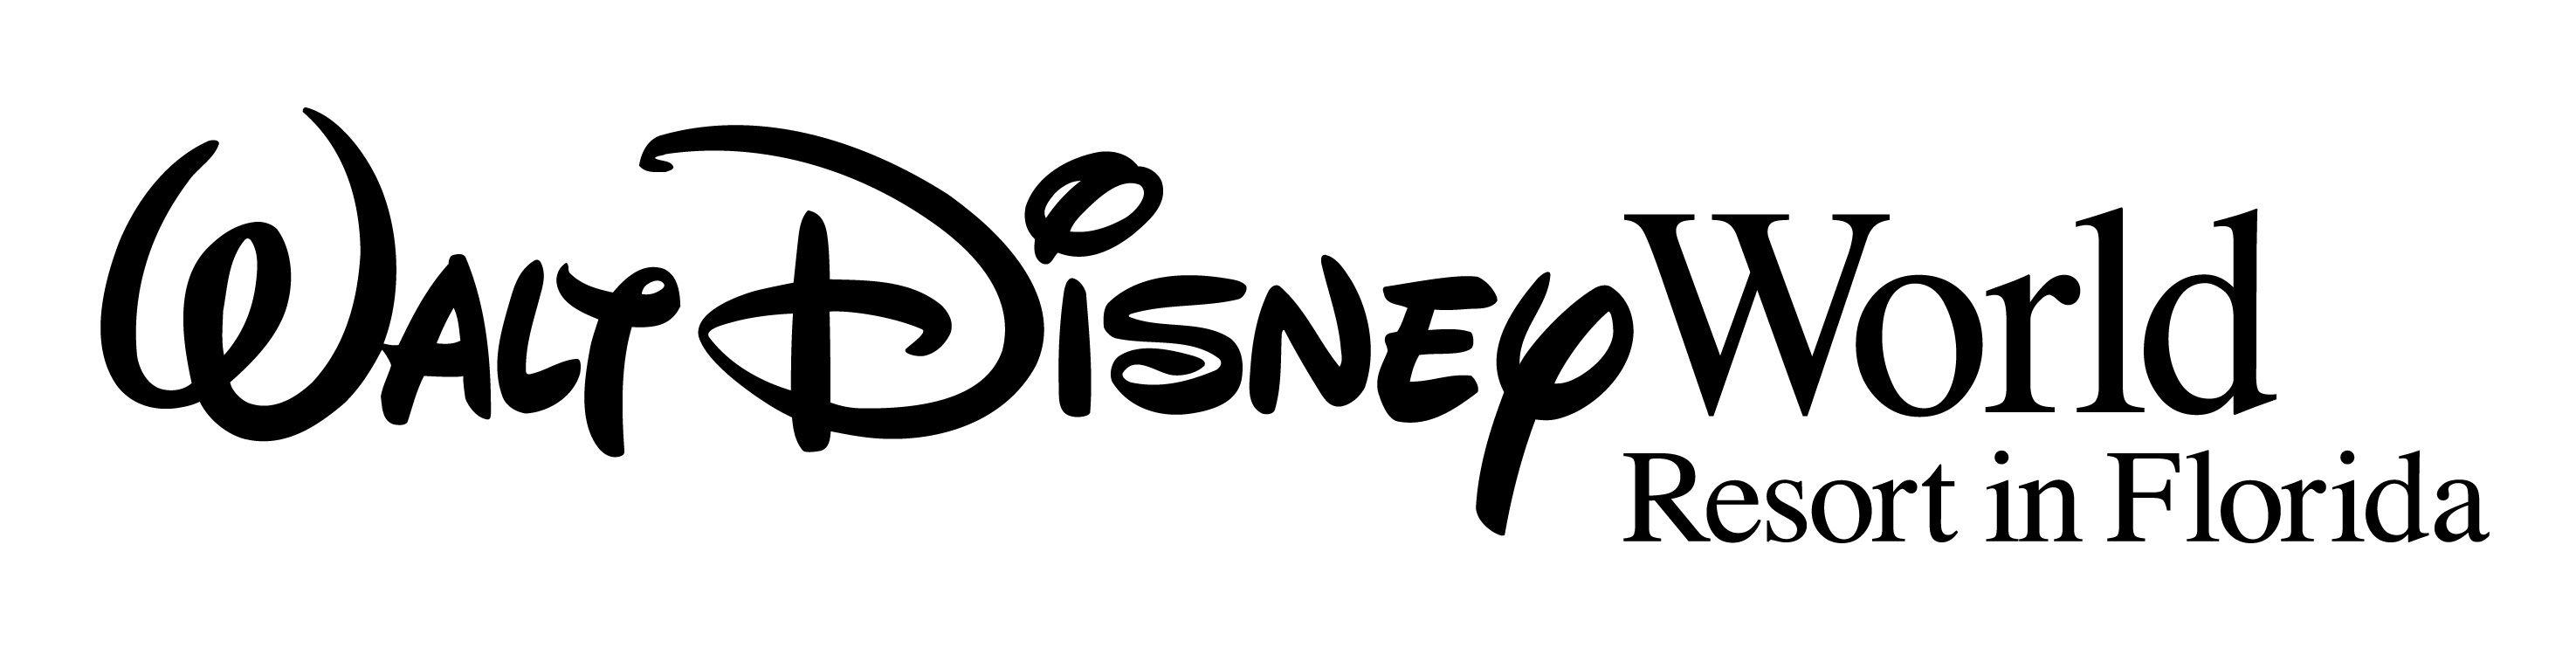 Disney World Florida Logo - Walt Disney World Resort in Florida